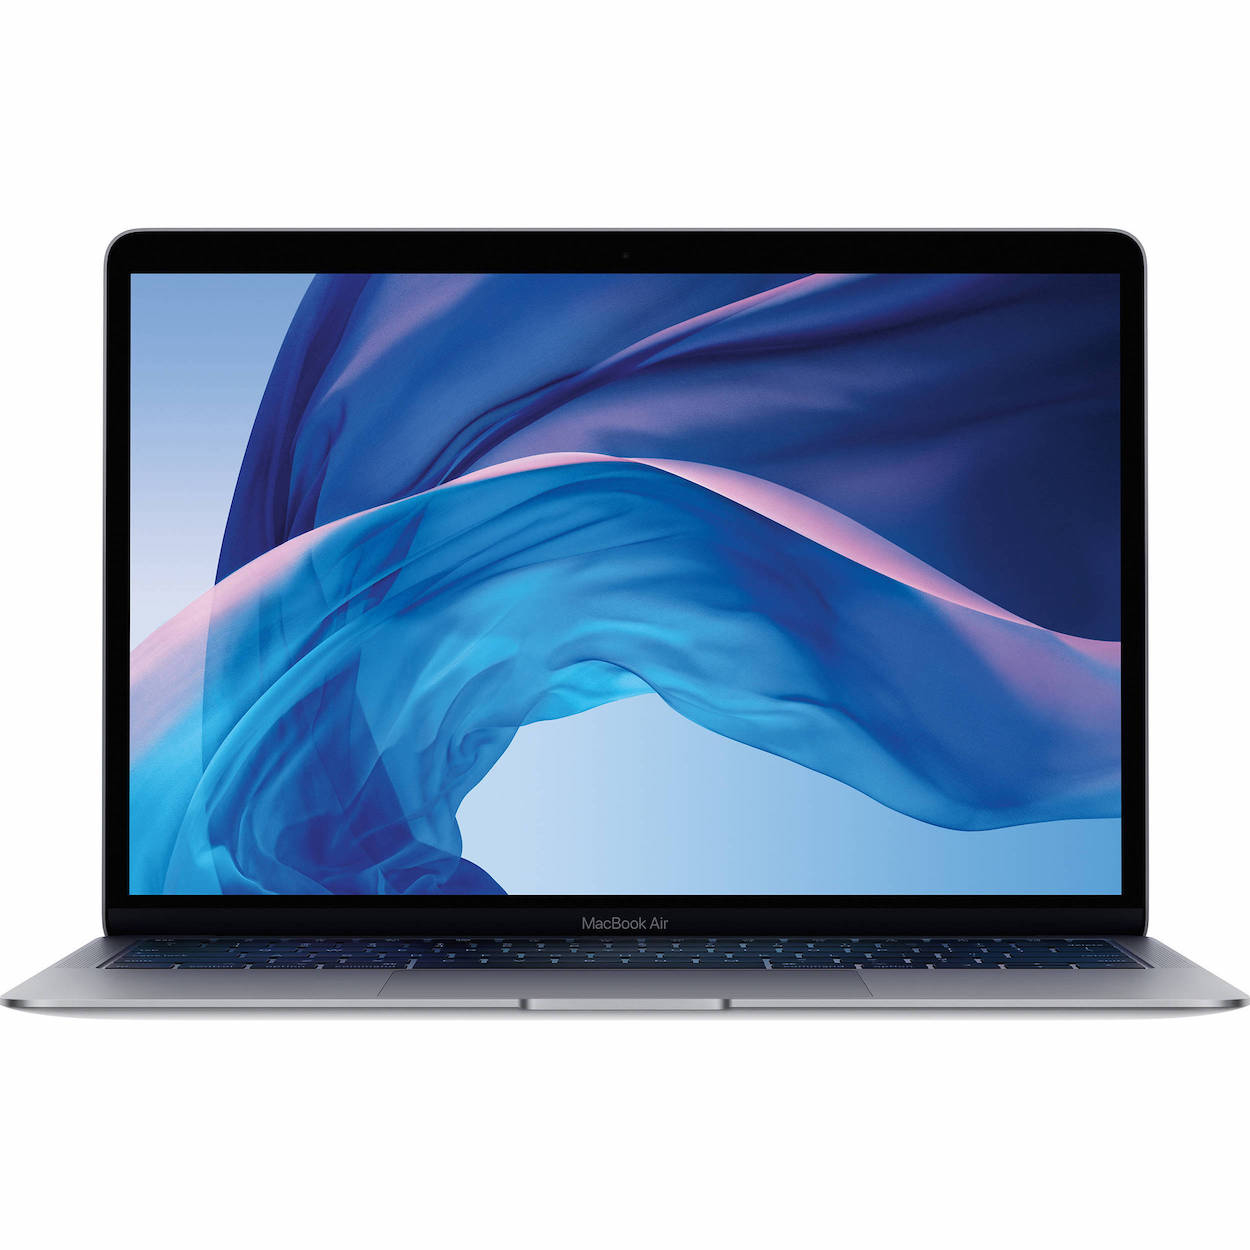 macbook-air-2020-13-inch-core-i5-8gb-256gb-z0yj0-cto-new-99-bac-sku-19516847459310